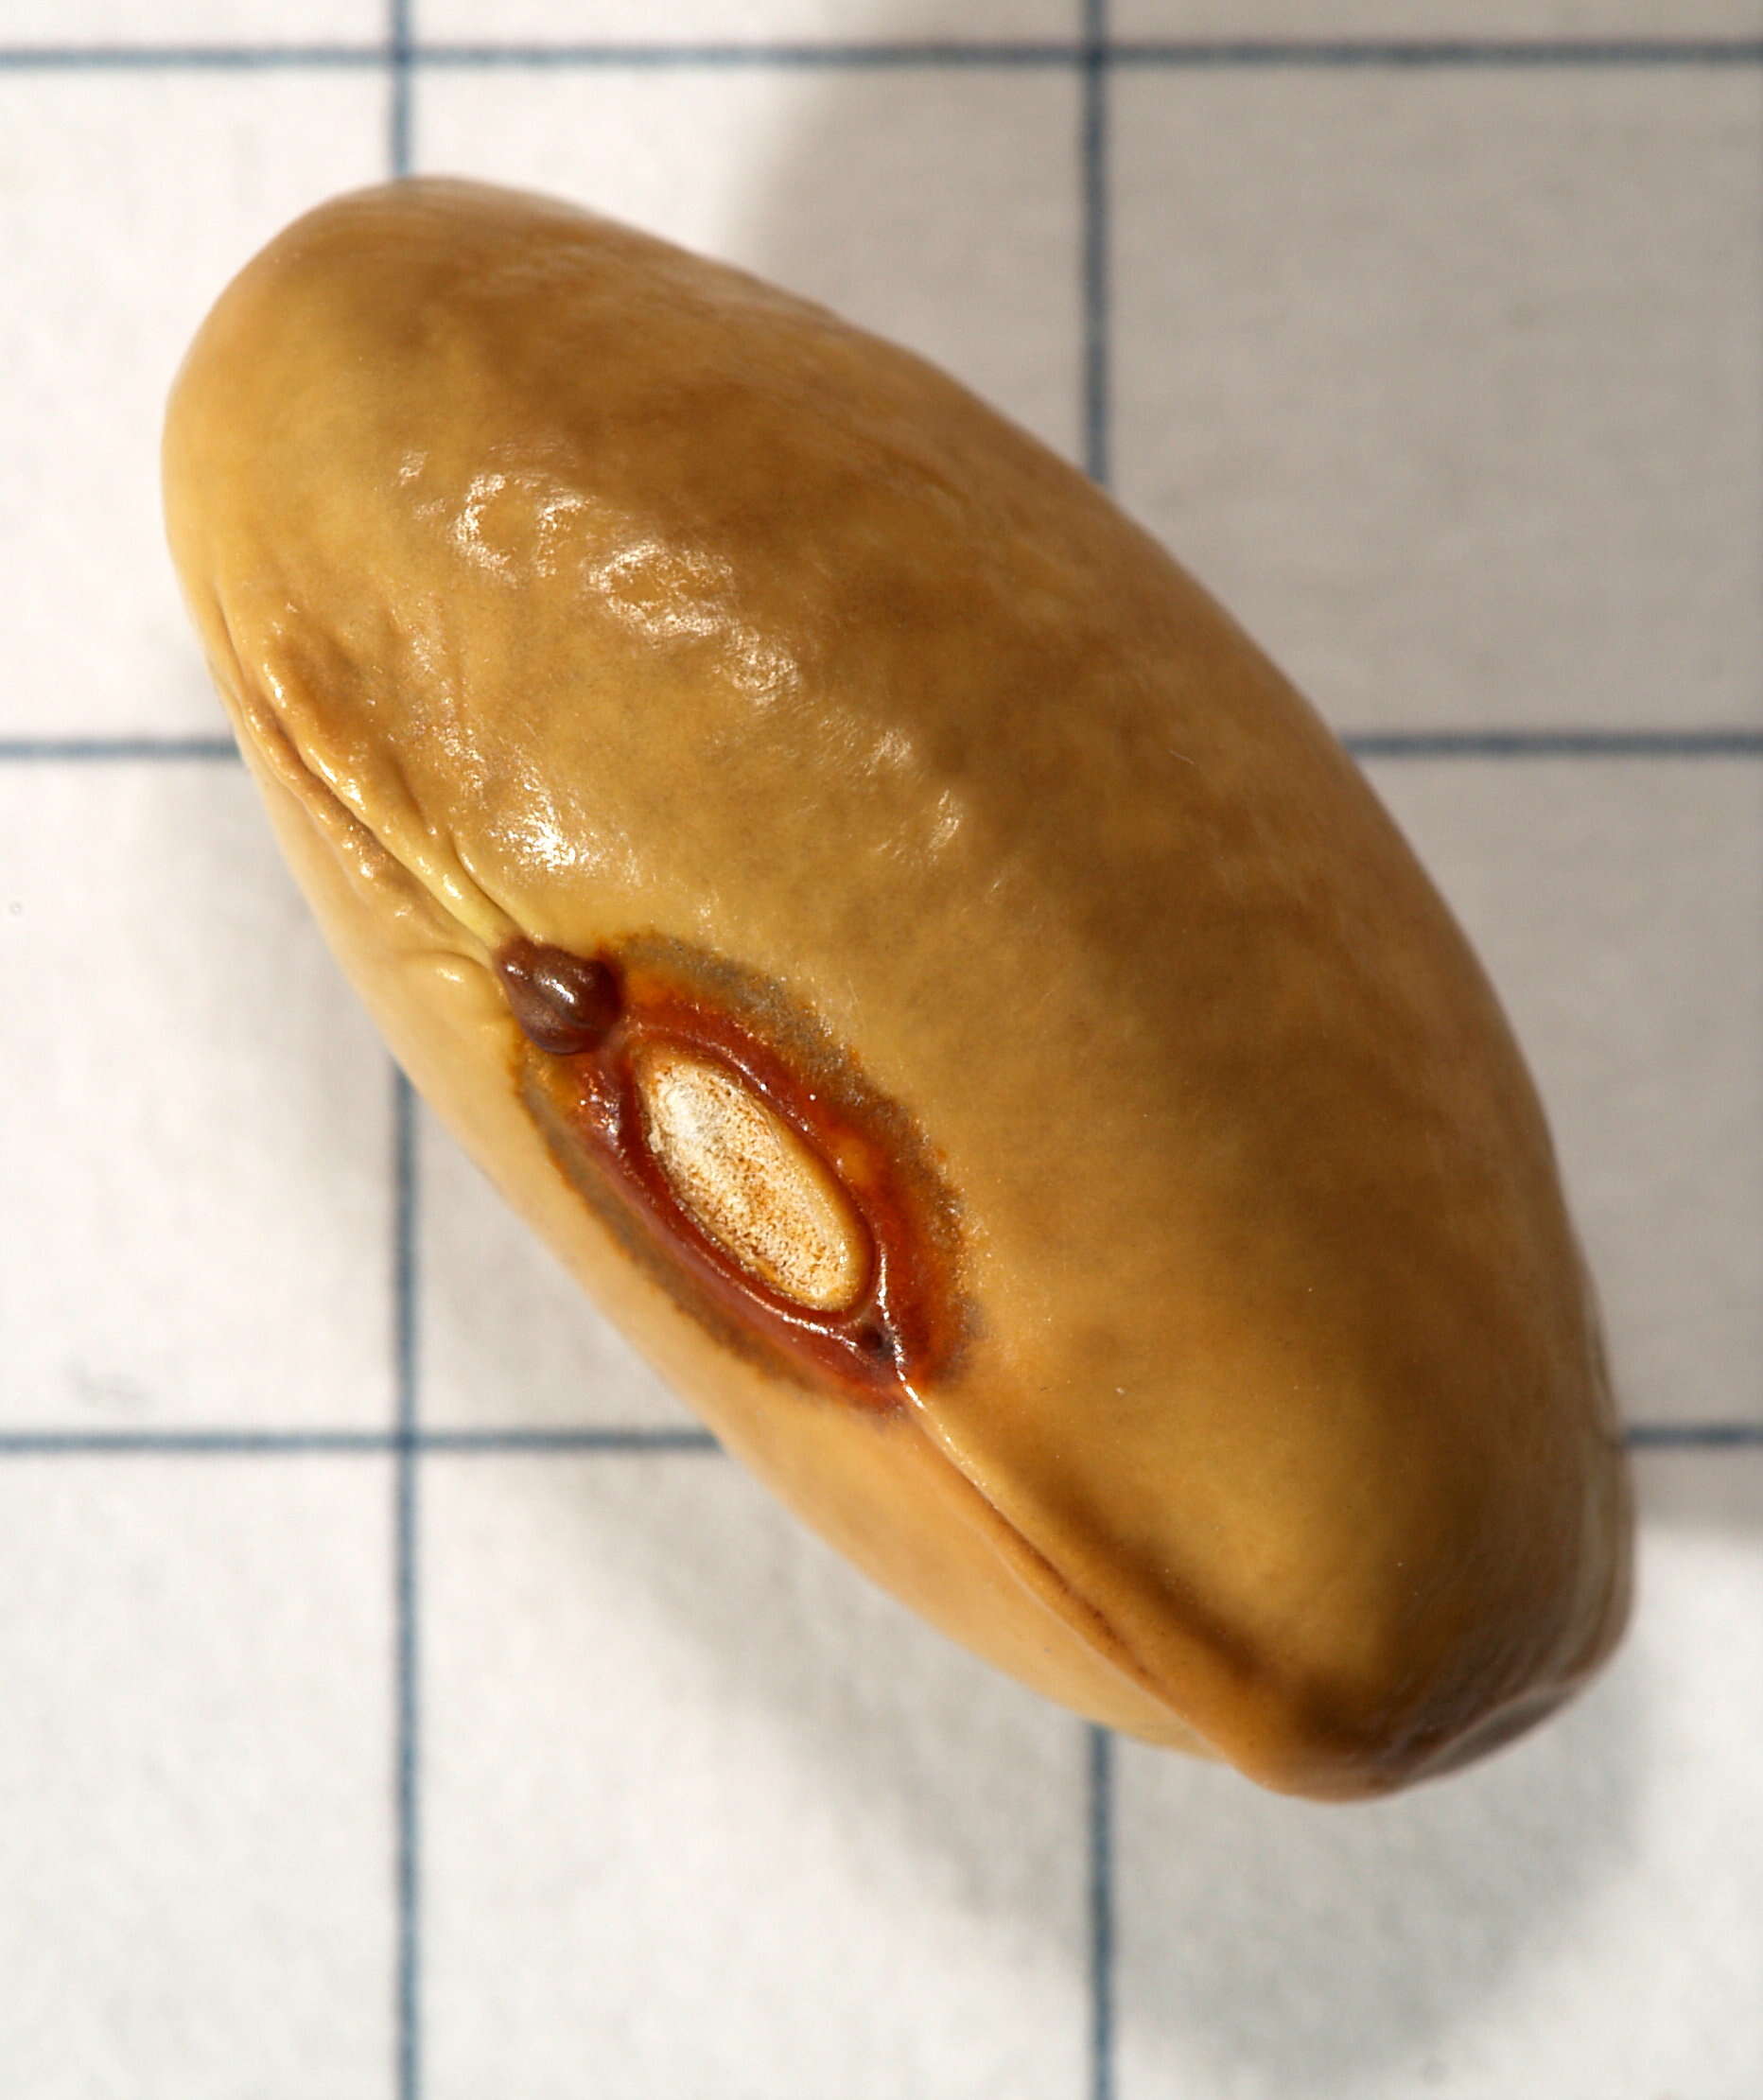 Image of kidney bean